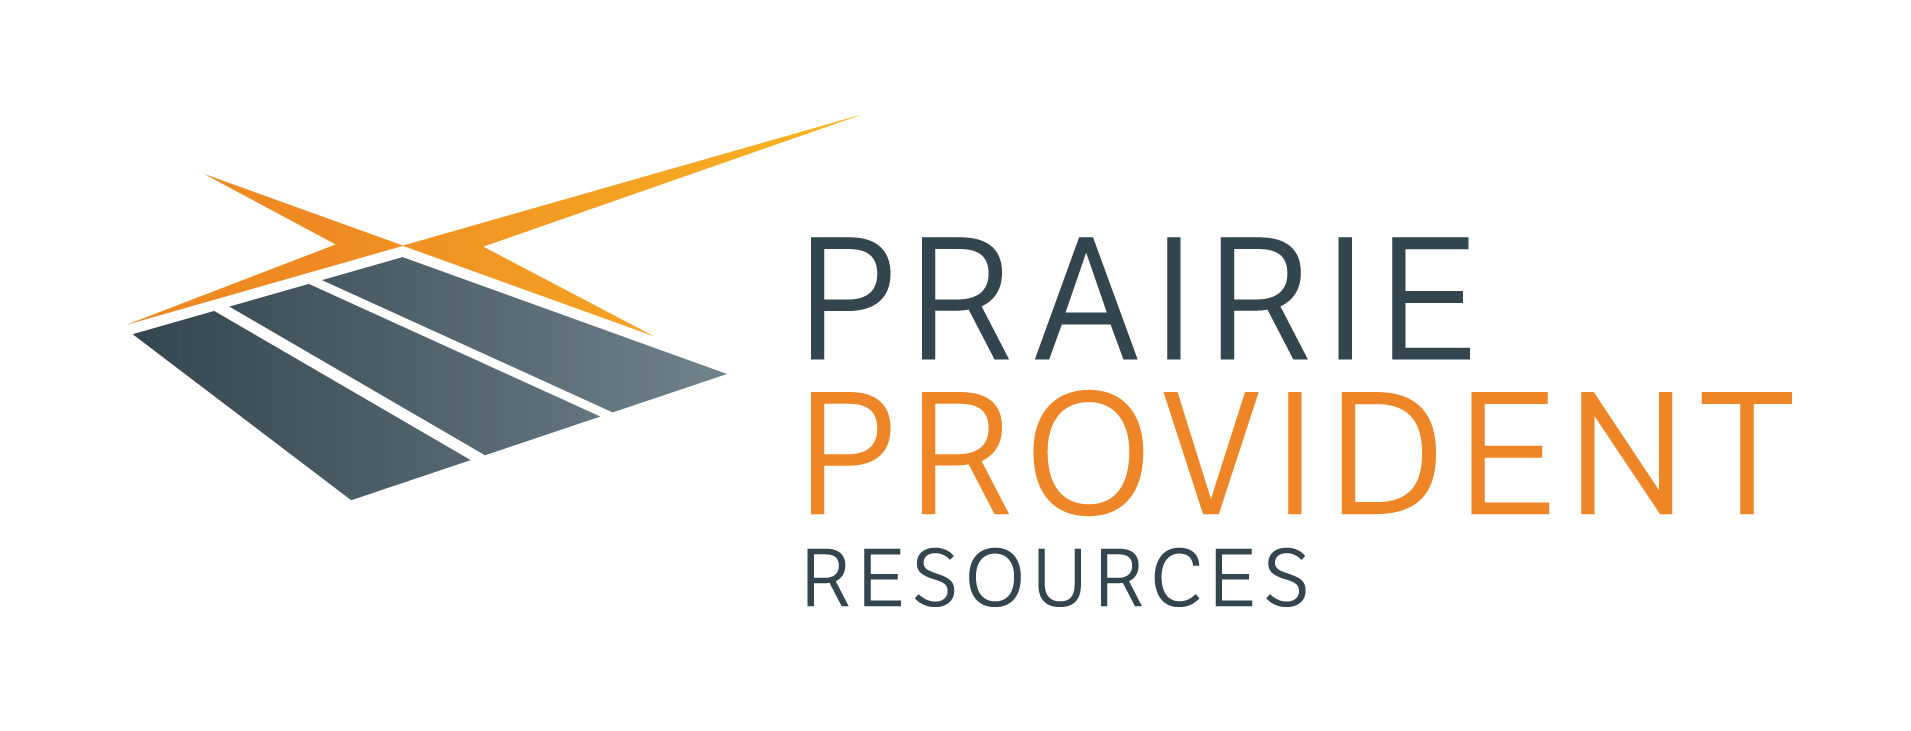 Prairie Logo - Prairie Provident Resources